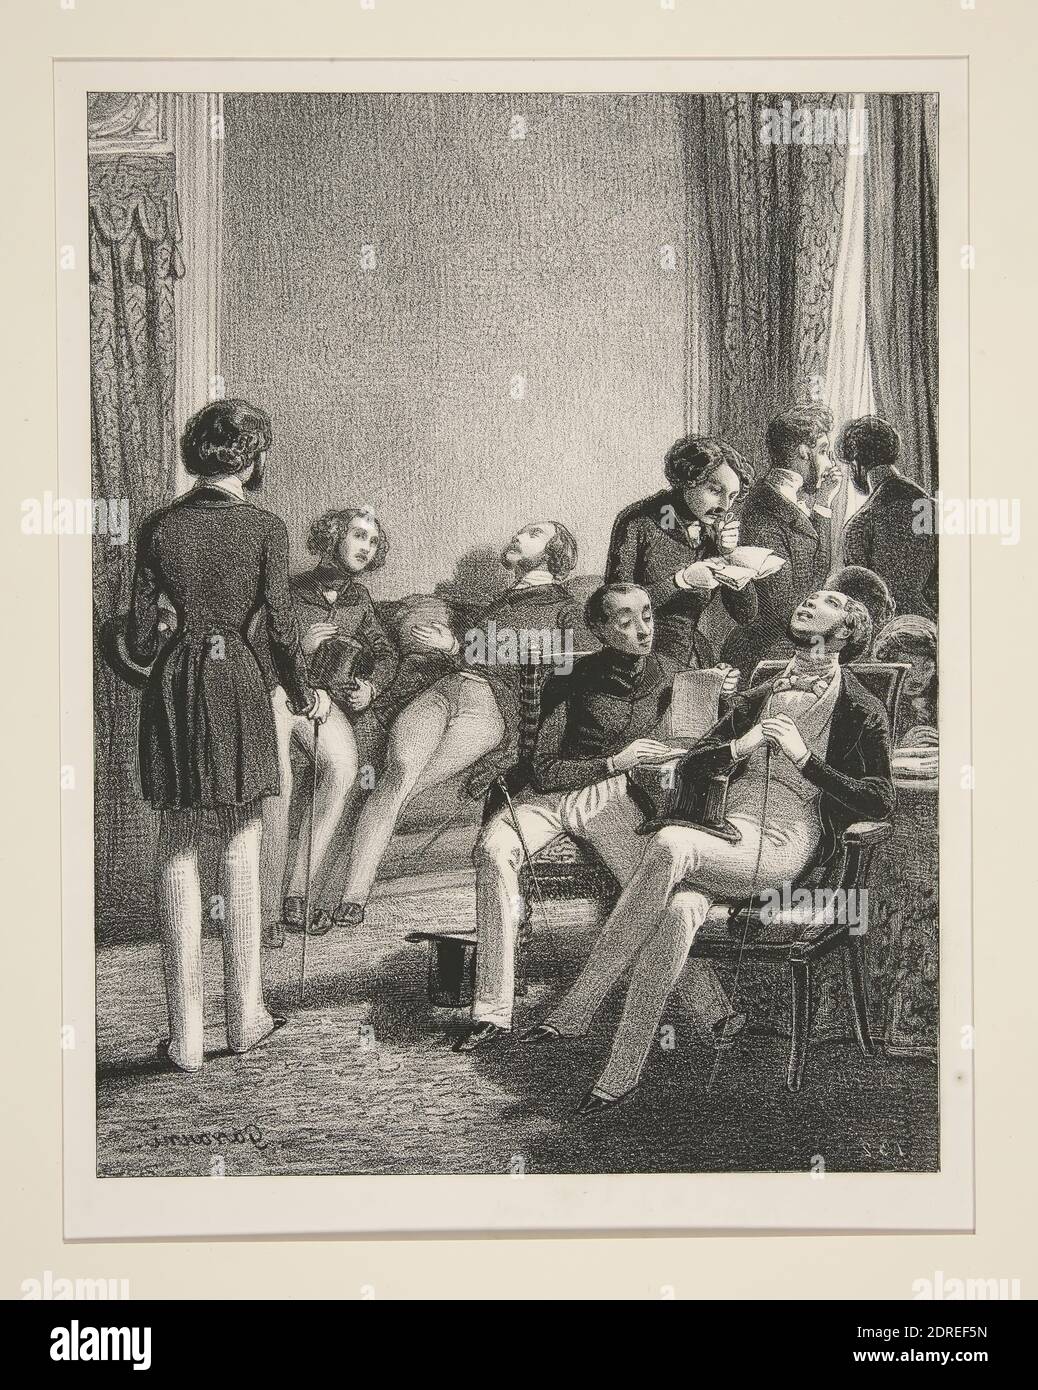 Artist: Paul Gavarni, French, 1804–1866, Voyage Pittoresque Autour d’Une Femme a la Mode, Lithograph, French, 19th century, Works on Paper - Prints Stock Photo